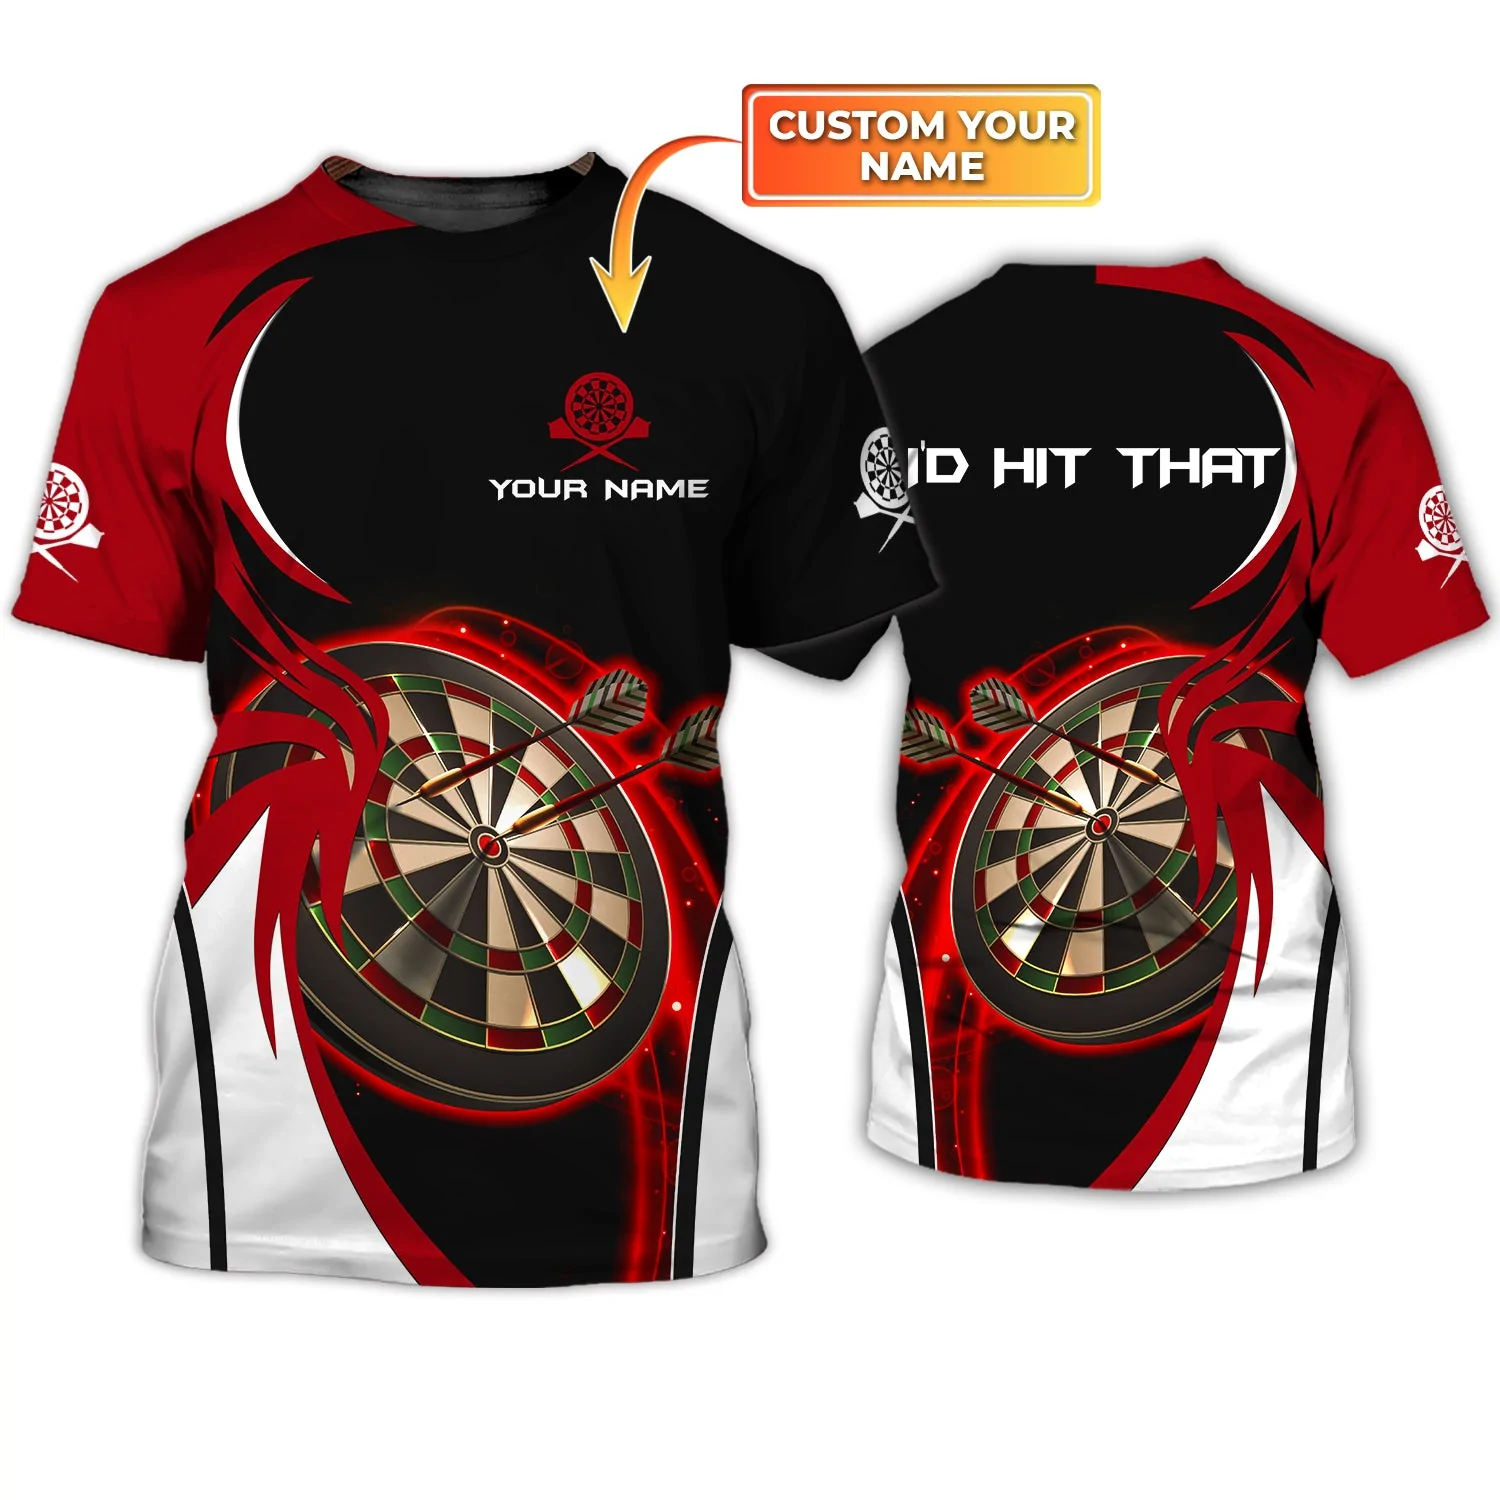 id hit that dart personalized name 3d tshirt darts player darts gift darts shirt darts player gift dt134 ezxoz